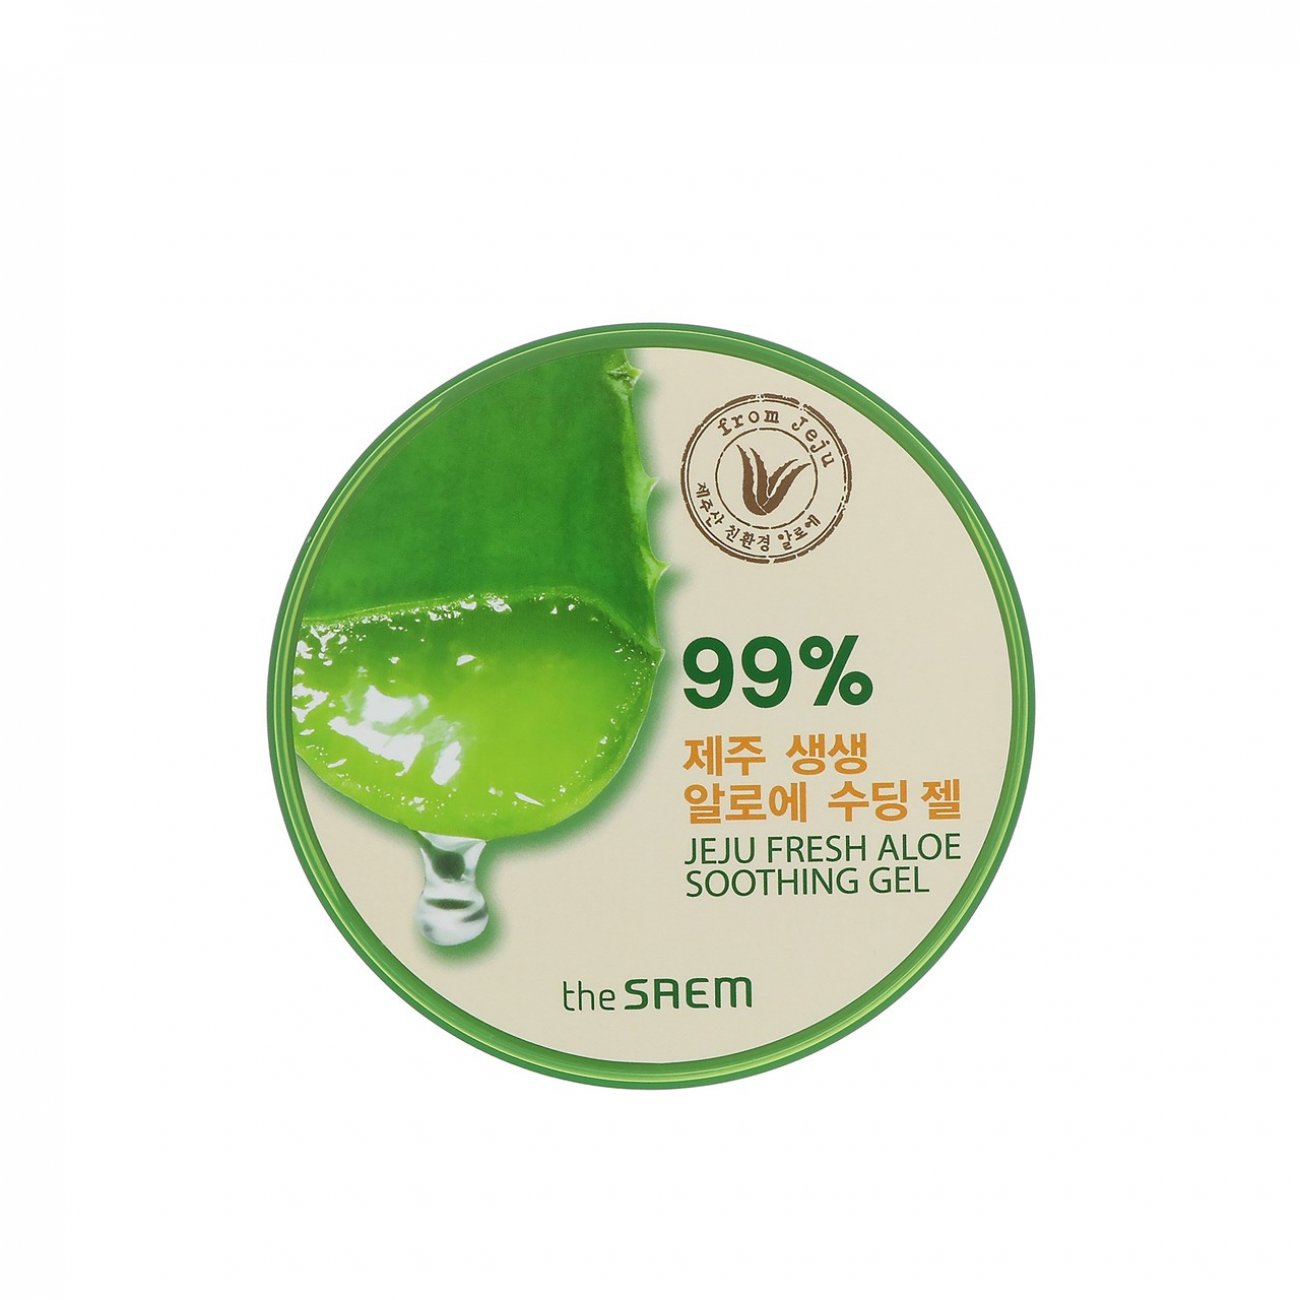 The Saem Jeju Fresh Aloe Soothing Gel 300 мл. The Saem гель для тела Jeju Fresh Aloe Soothing Gel 99%, 300 мл. Как переводится Soothing Gel. Soothing Gel перевод на русский.